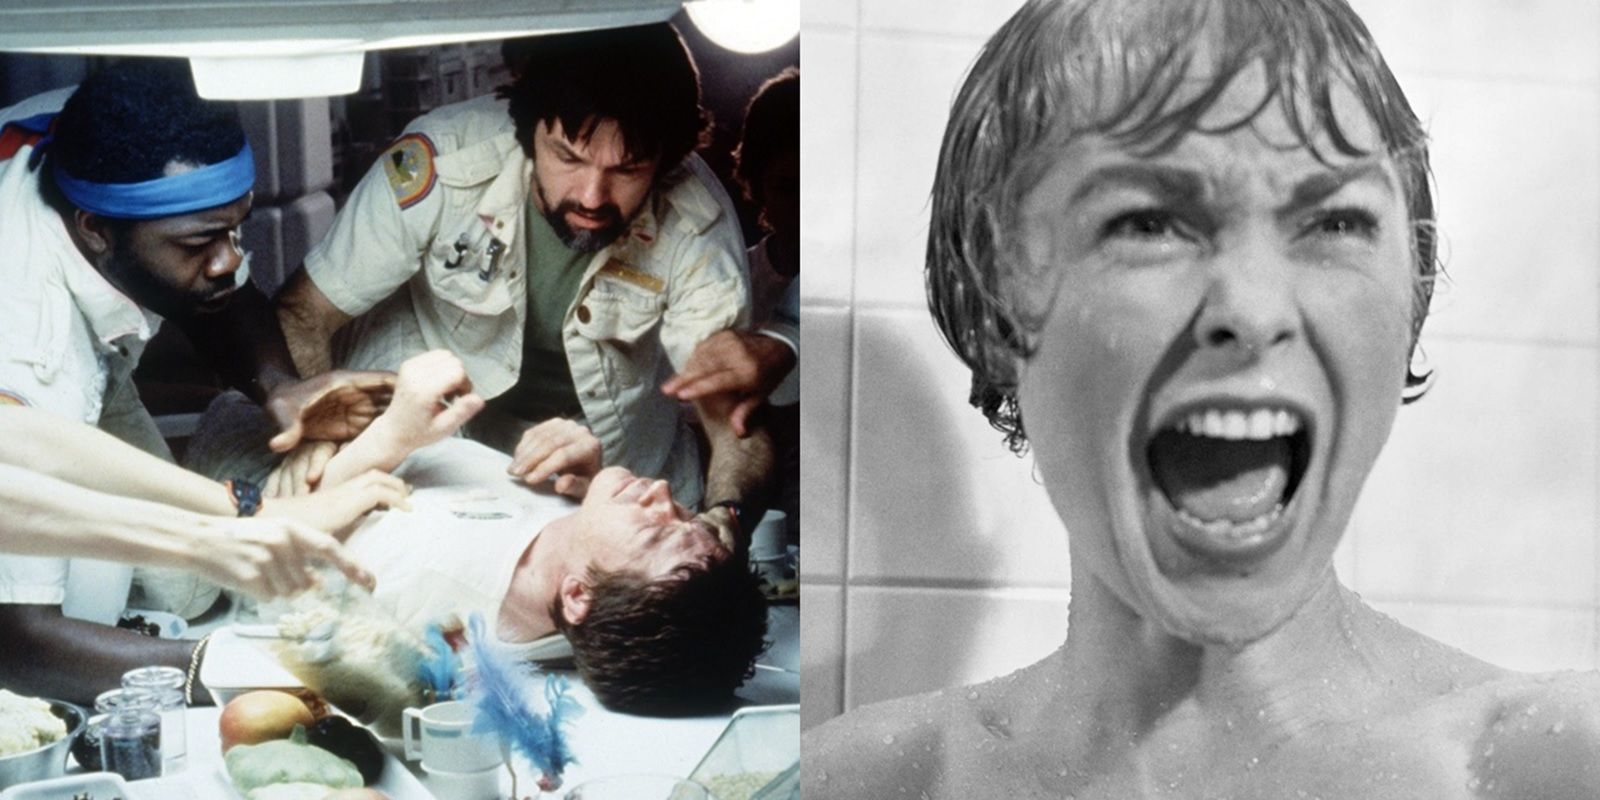 The chestburster scene in Alien and the shower murder in Psycho